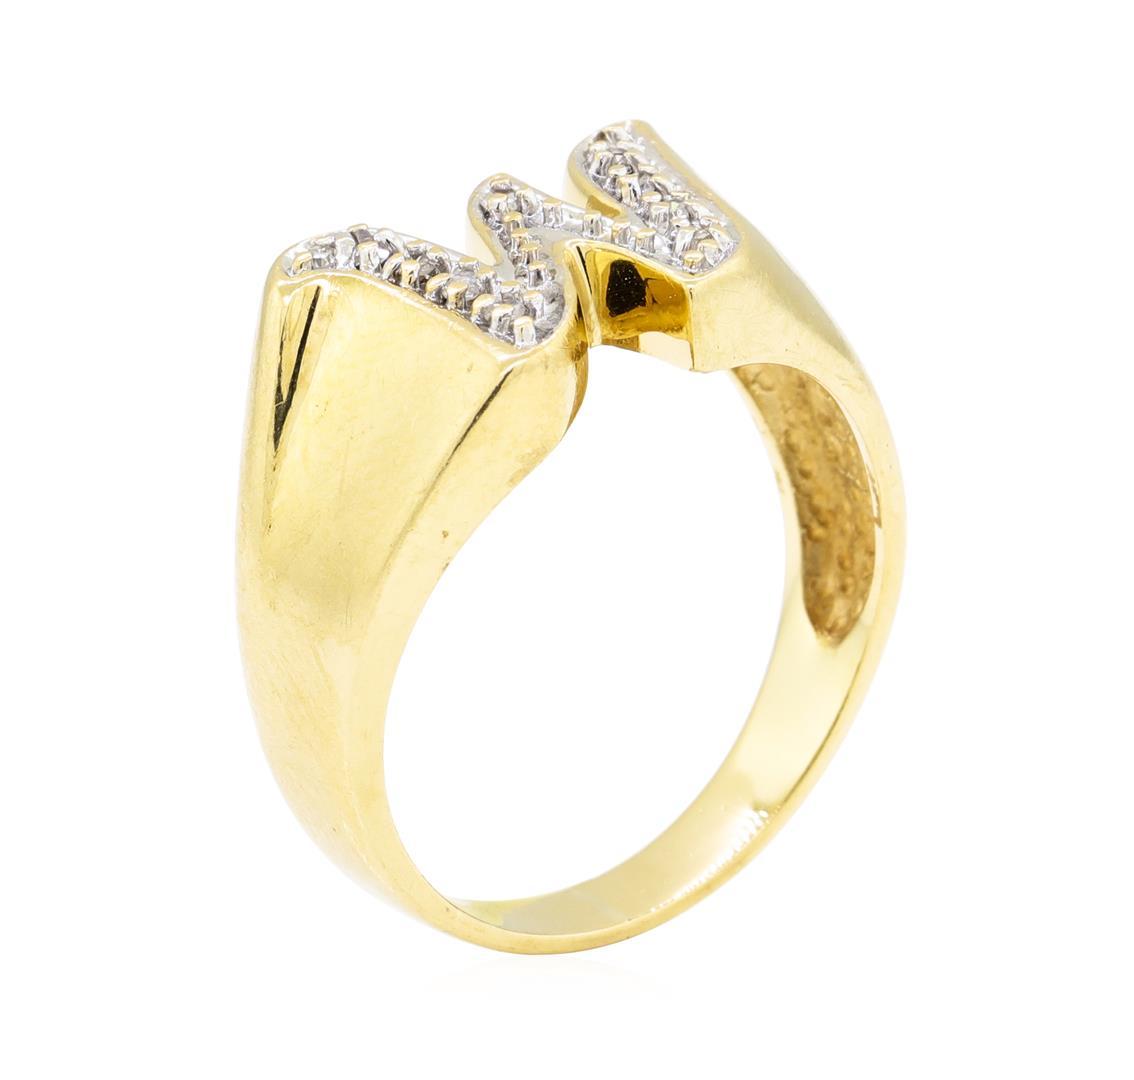 0.05 ctw Diamond "W" Ring - 14KT Yellow Gold